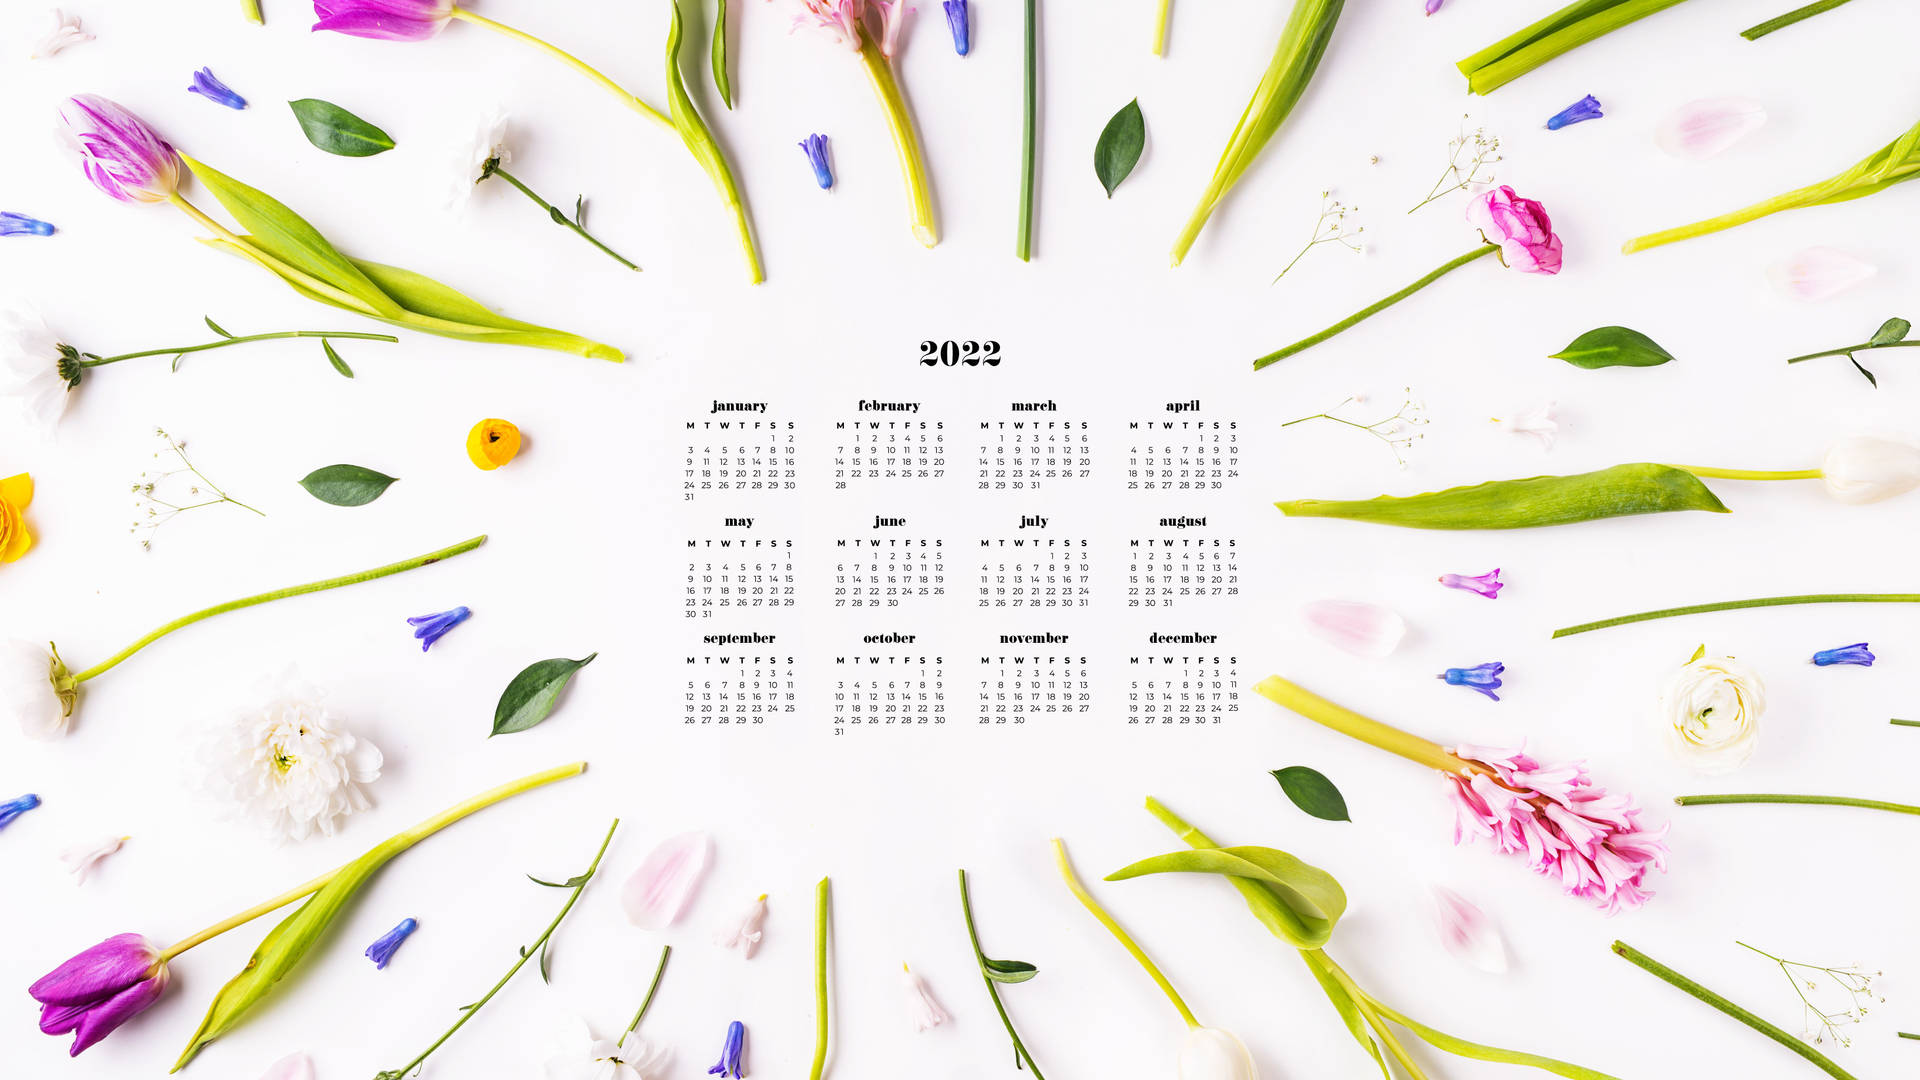 Tulips 2022 Calendar Wallpaper